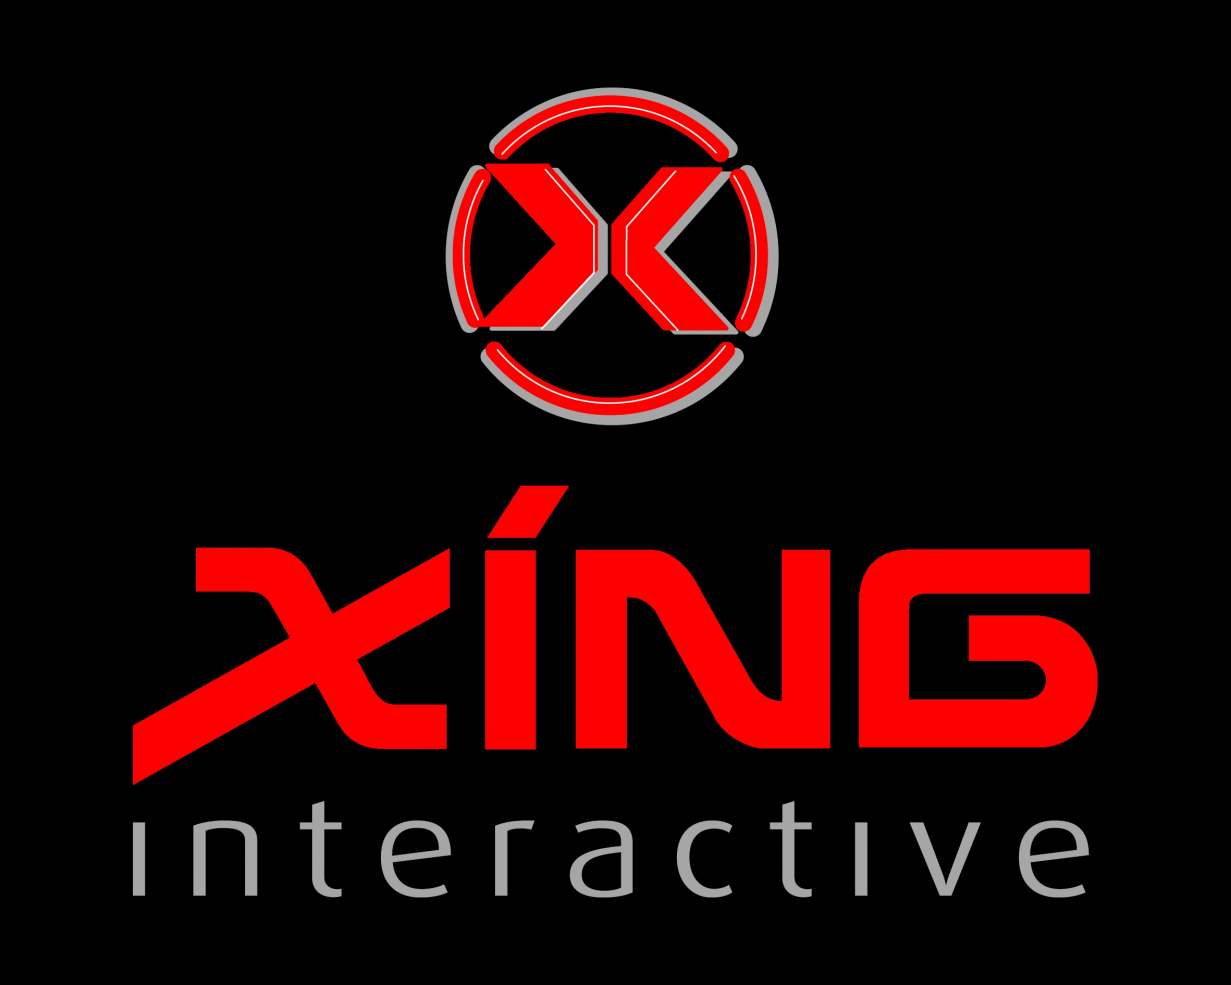 XingInternational Logo